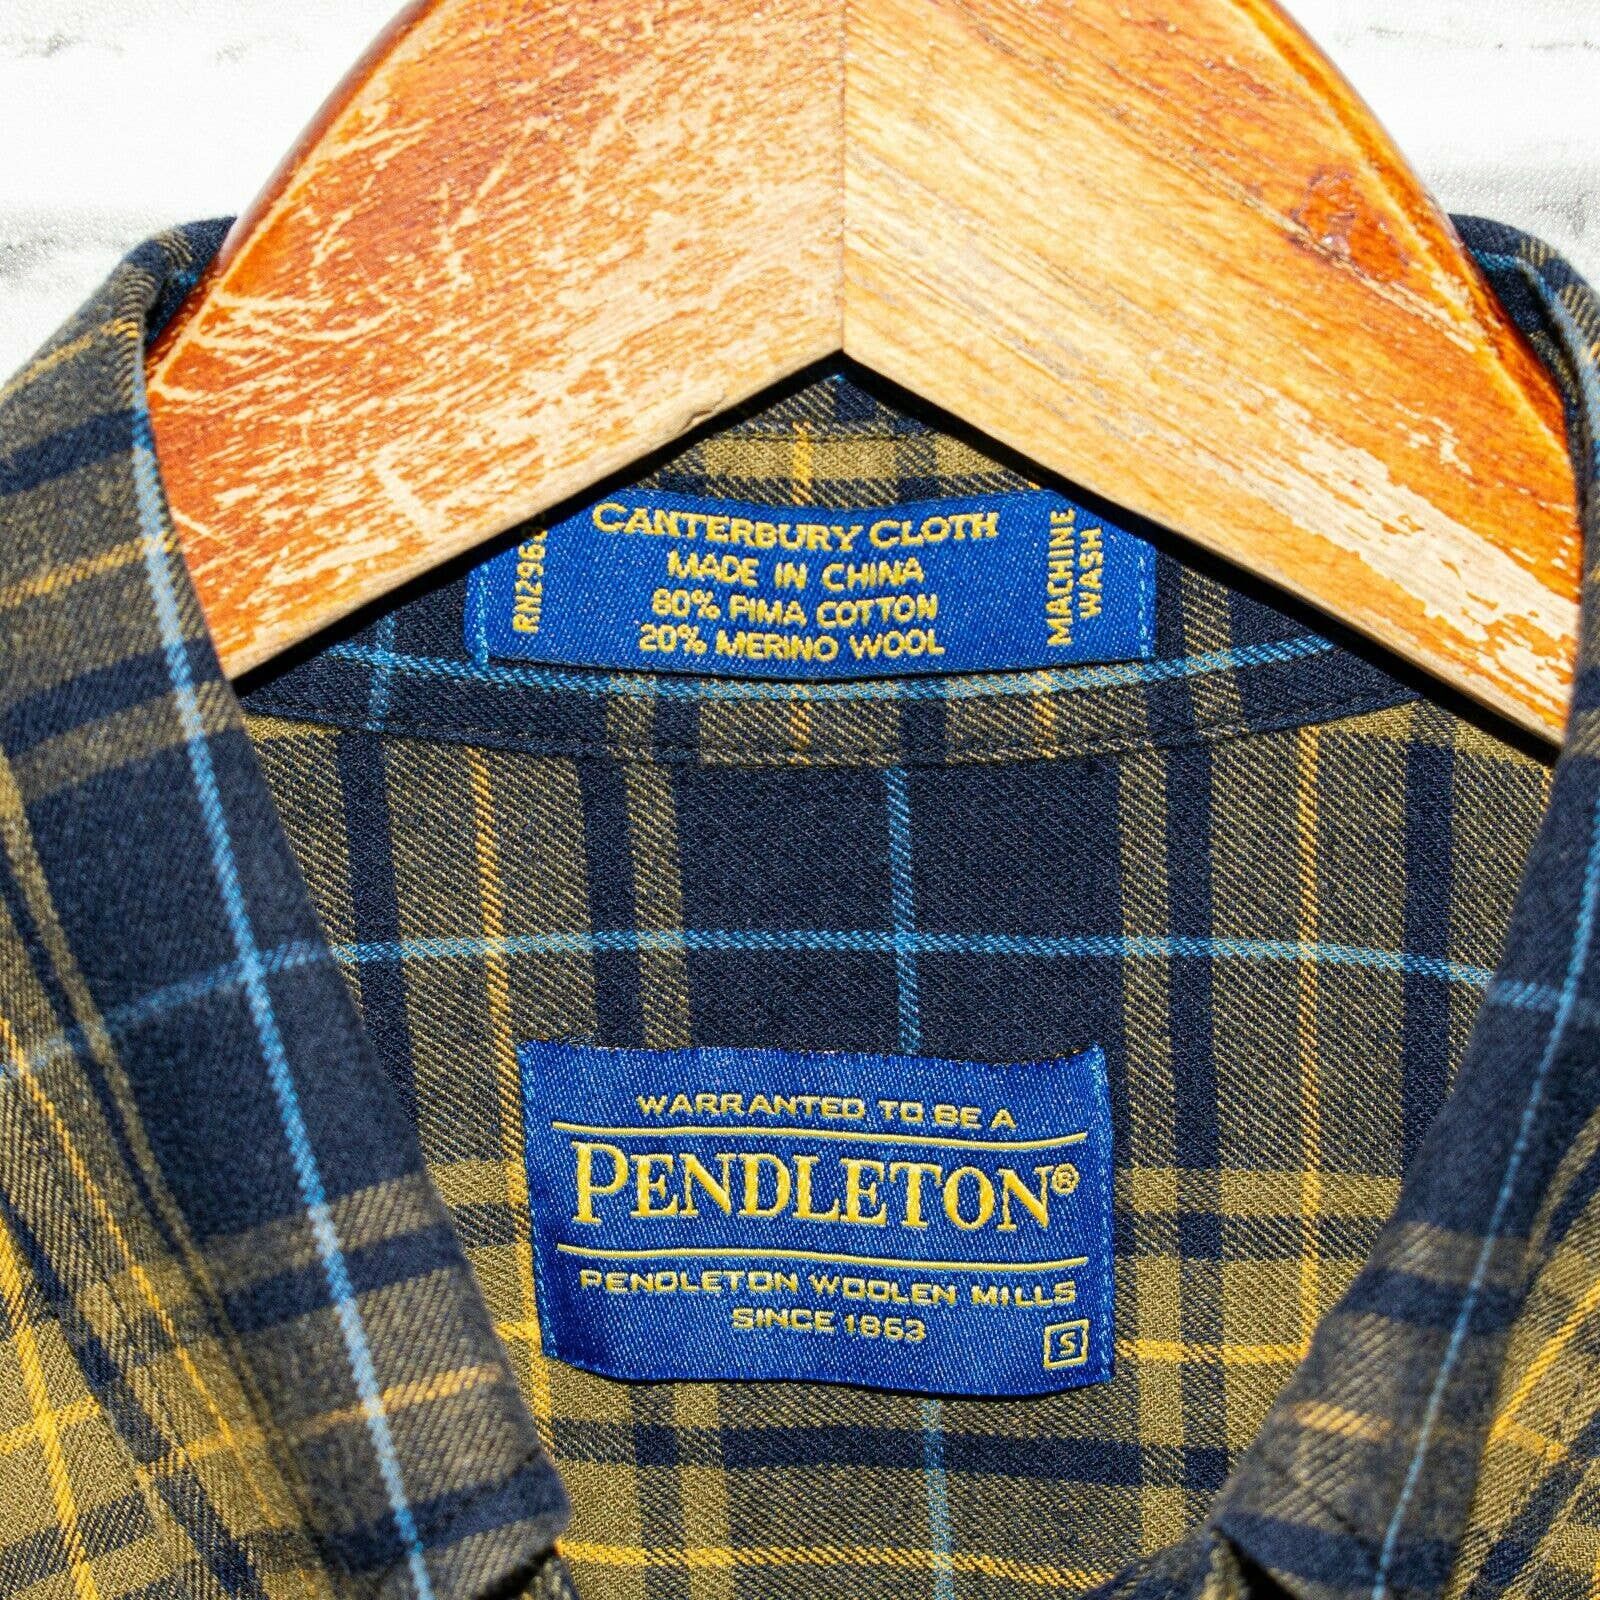 Pendleton Pendleton Flannel Shirt Brown Blue Plaid Cotton wool Size US S / EU 44-46 / 1 - 3 Preview